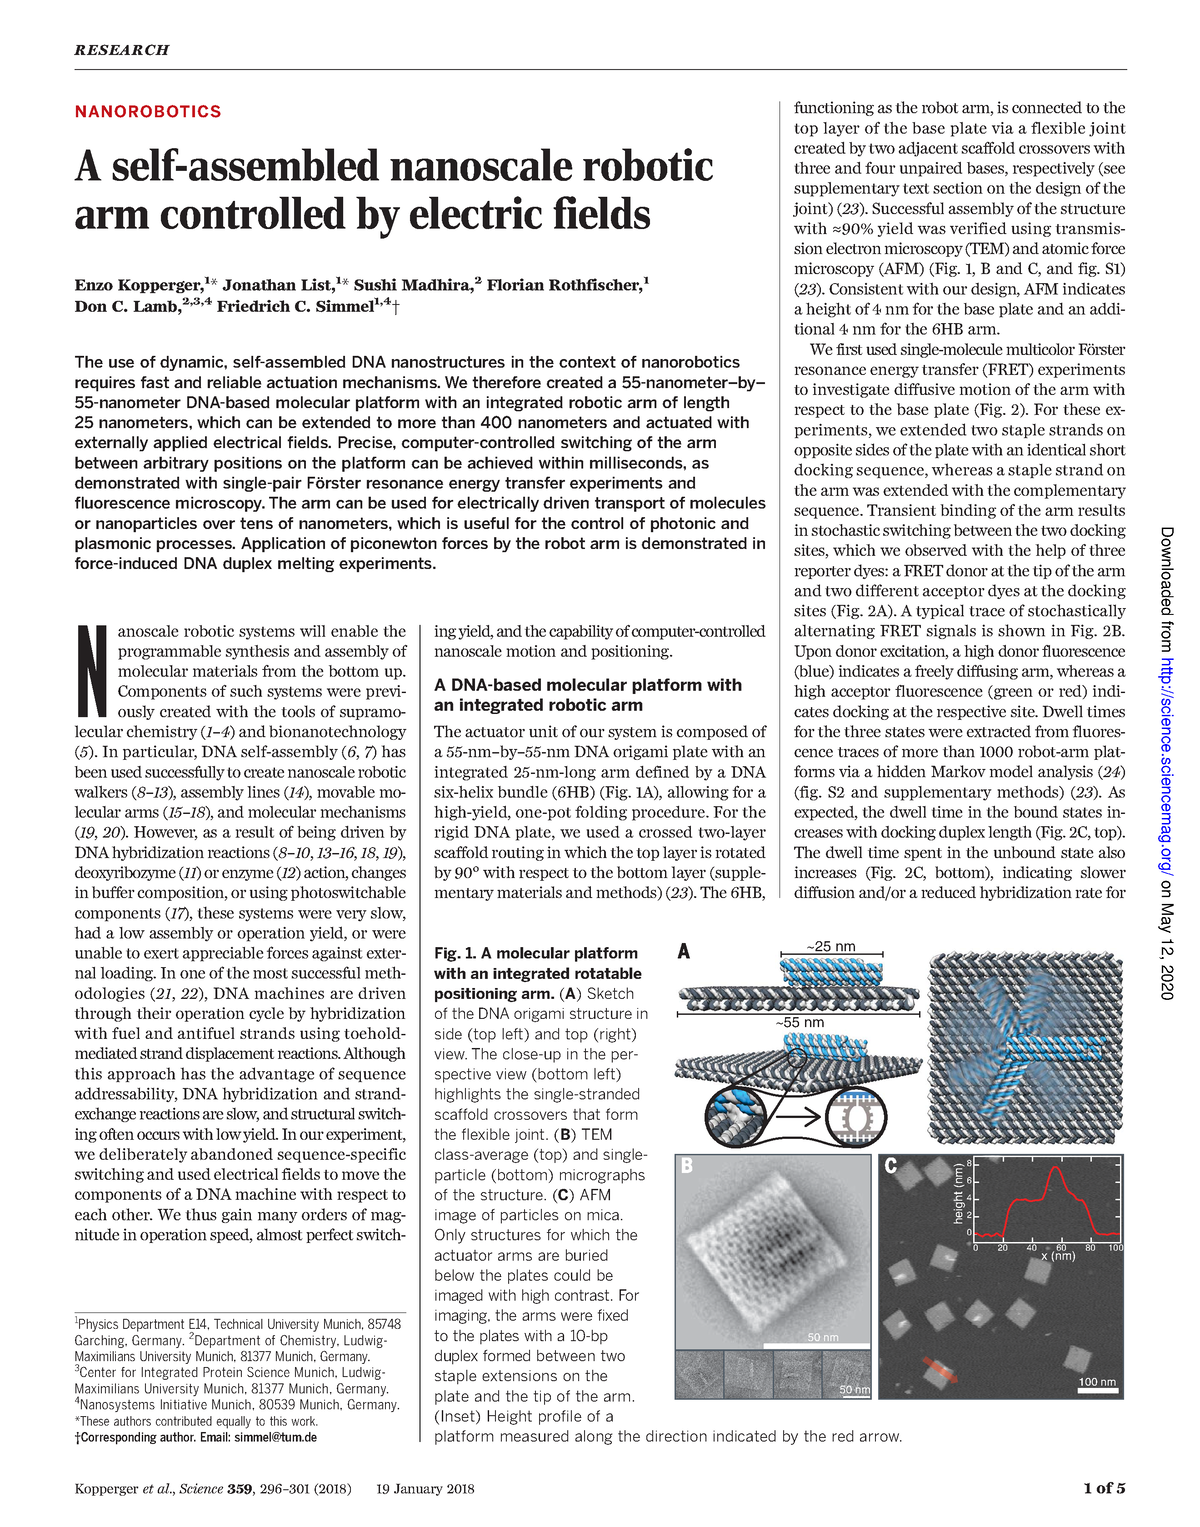 A nanoscale robotic arm controlled by electric fields - NANOROBOTICS A self-assembled -